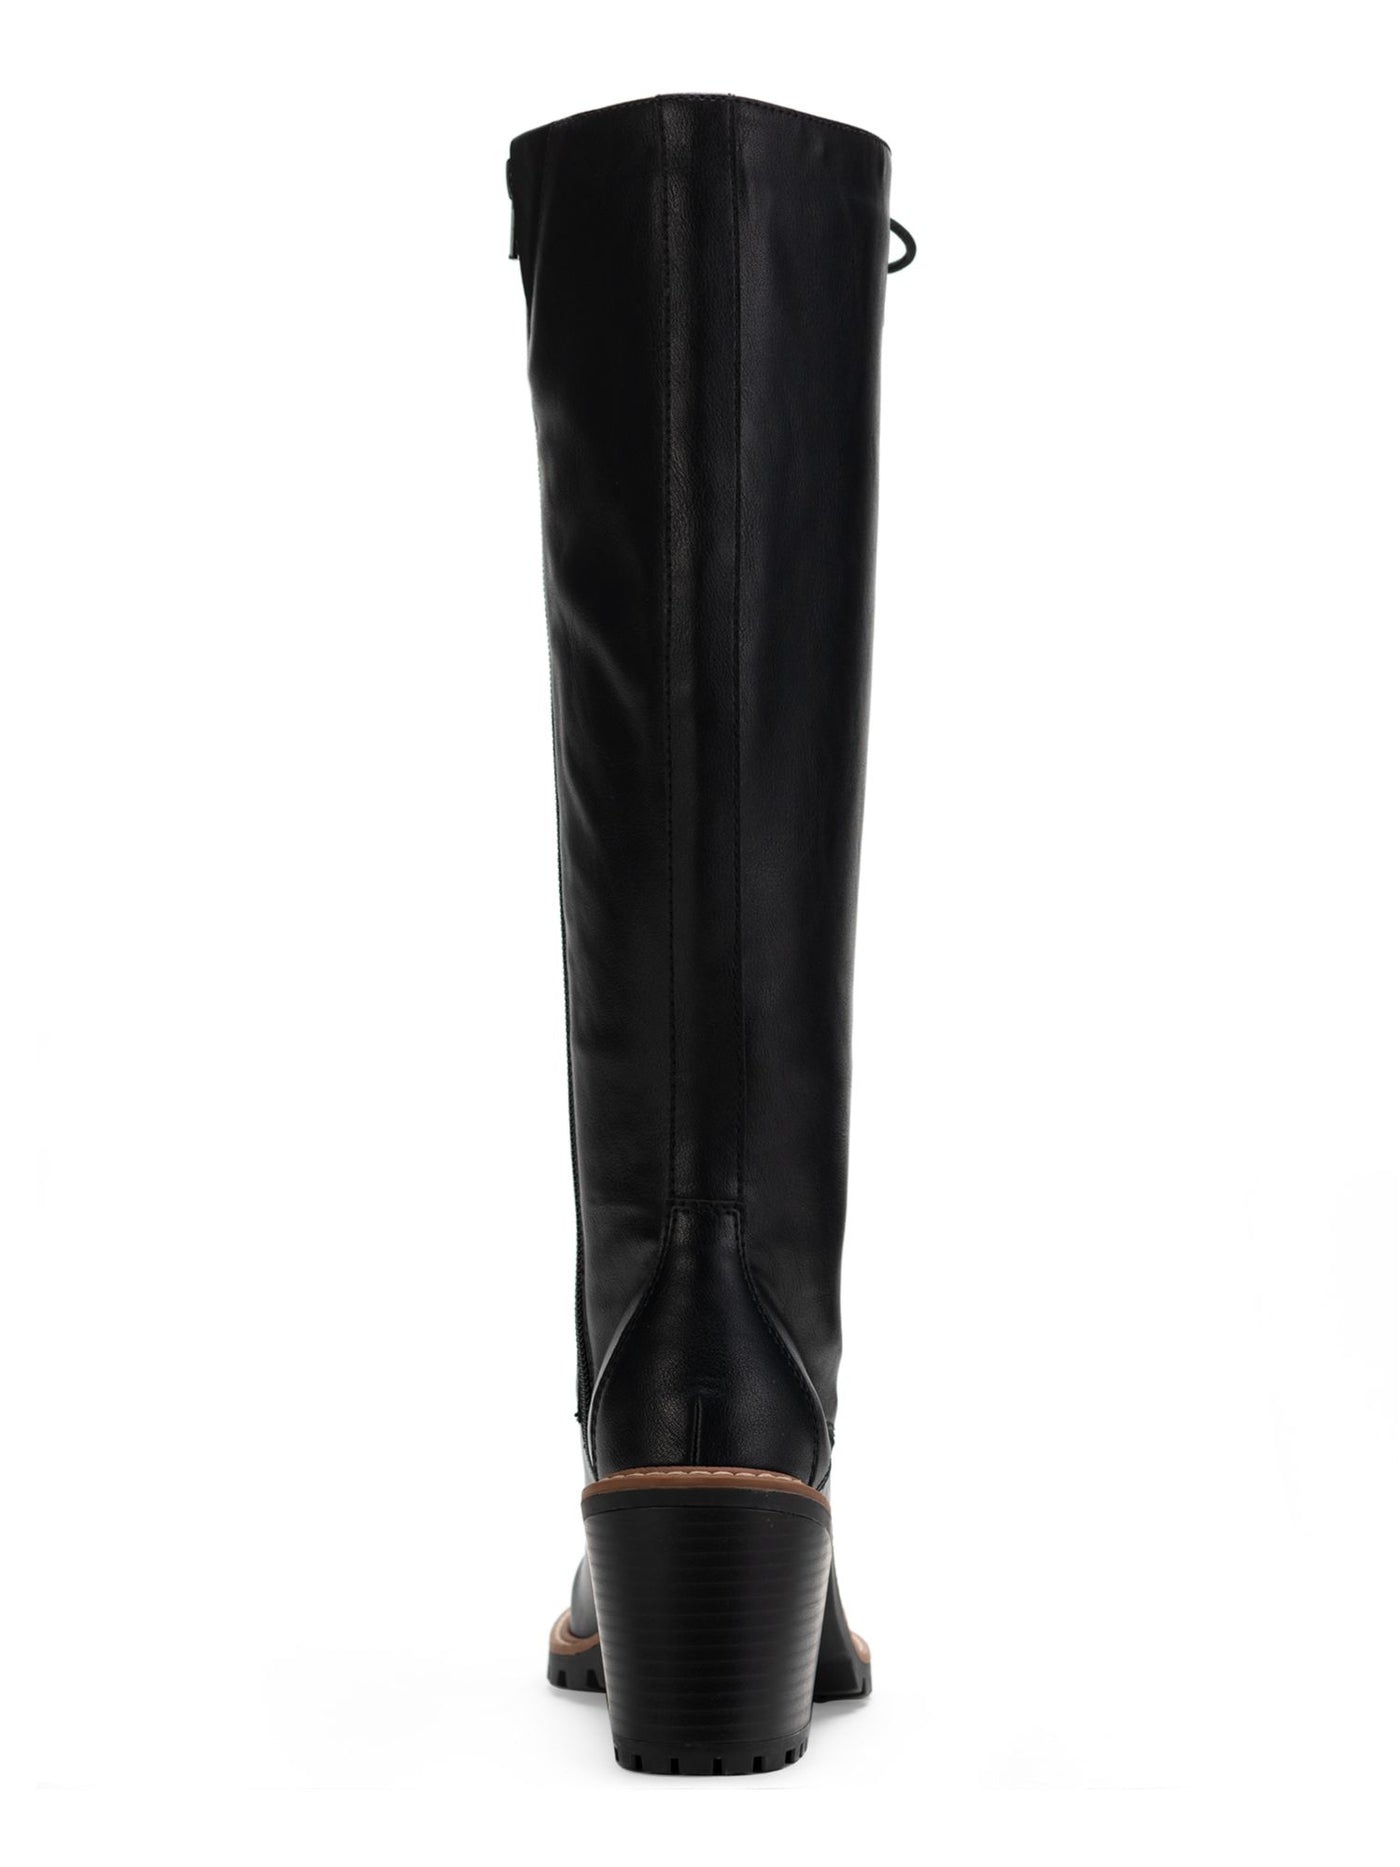 SUN STONE Womens Black Full Side Zip Round Toe Block Heel Lace-Up Heeled Boots 9.5